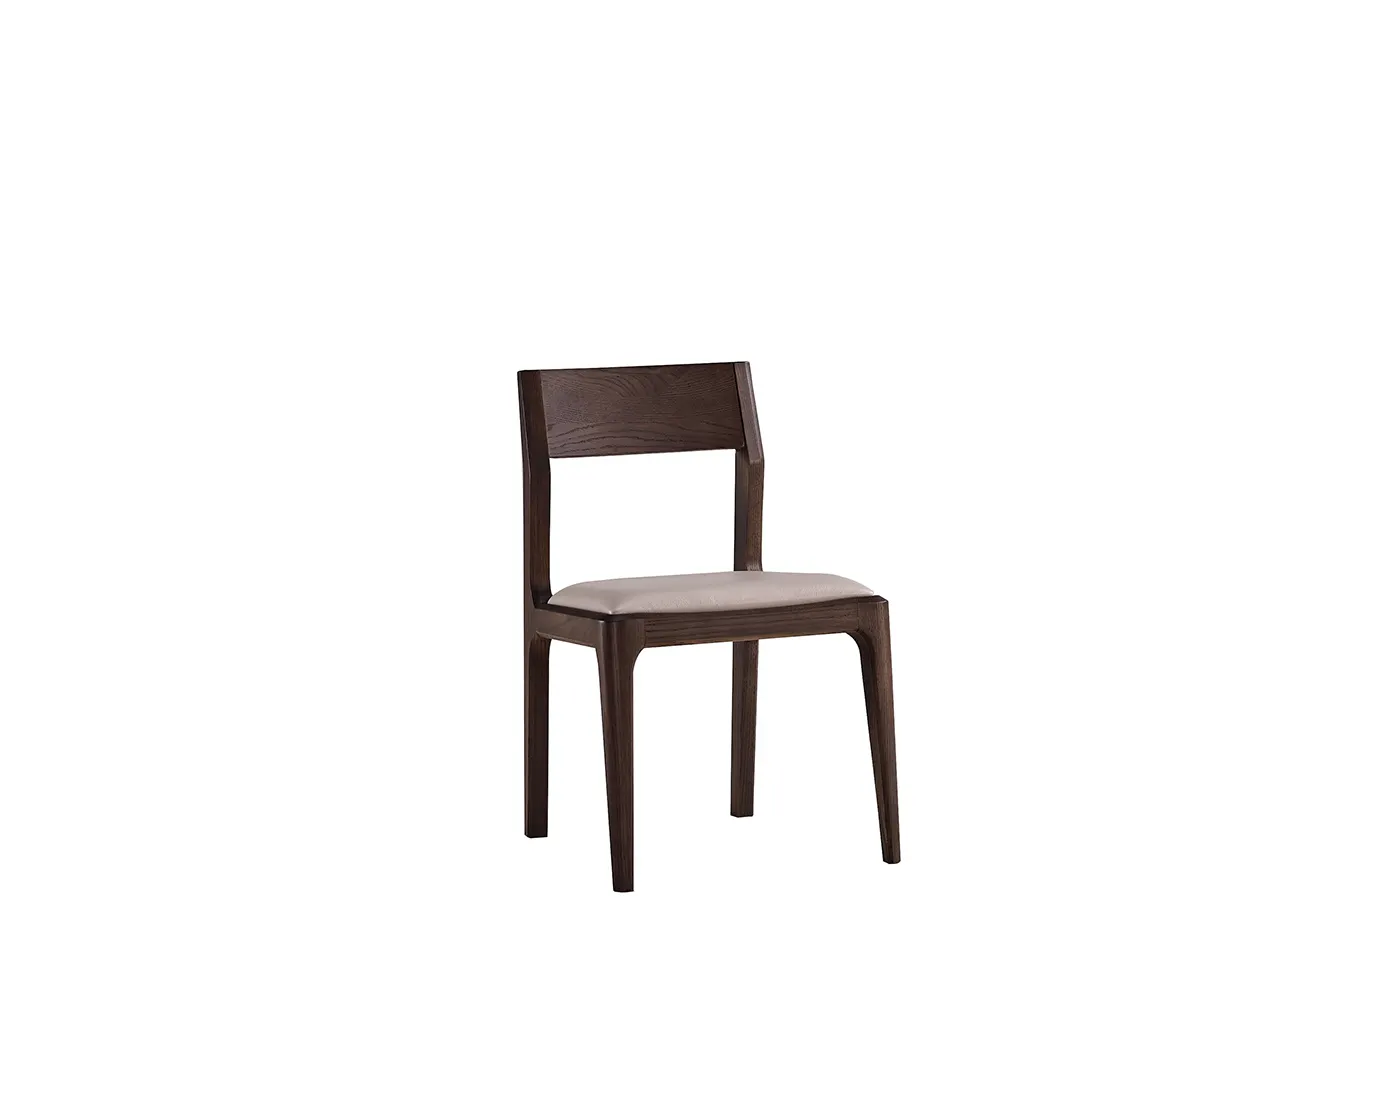 Lujo moderno hogar Hotel restaurante comedor silla de madera maciza sala de estar sin brazo sillas muebles